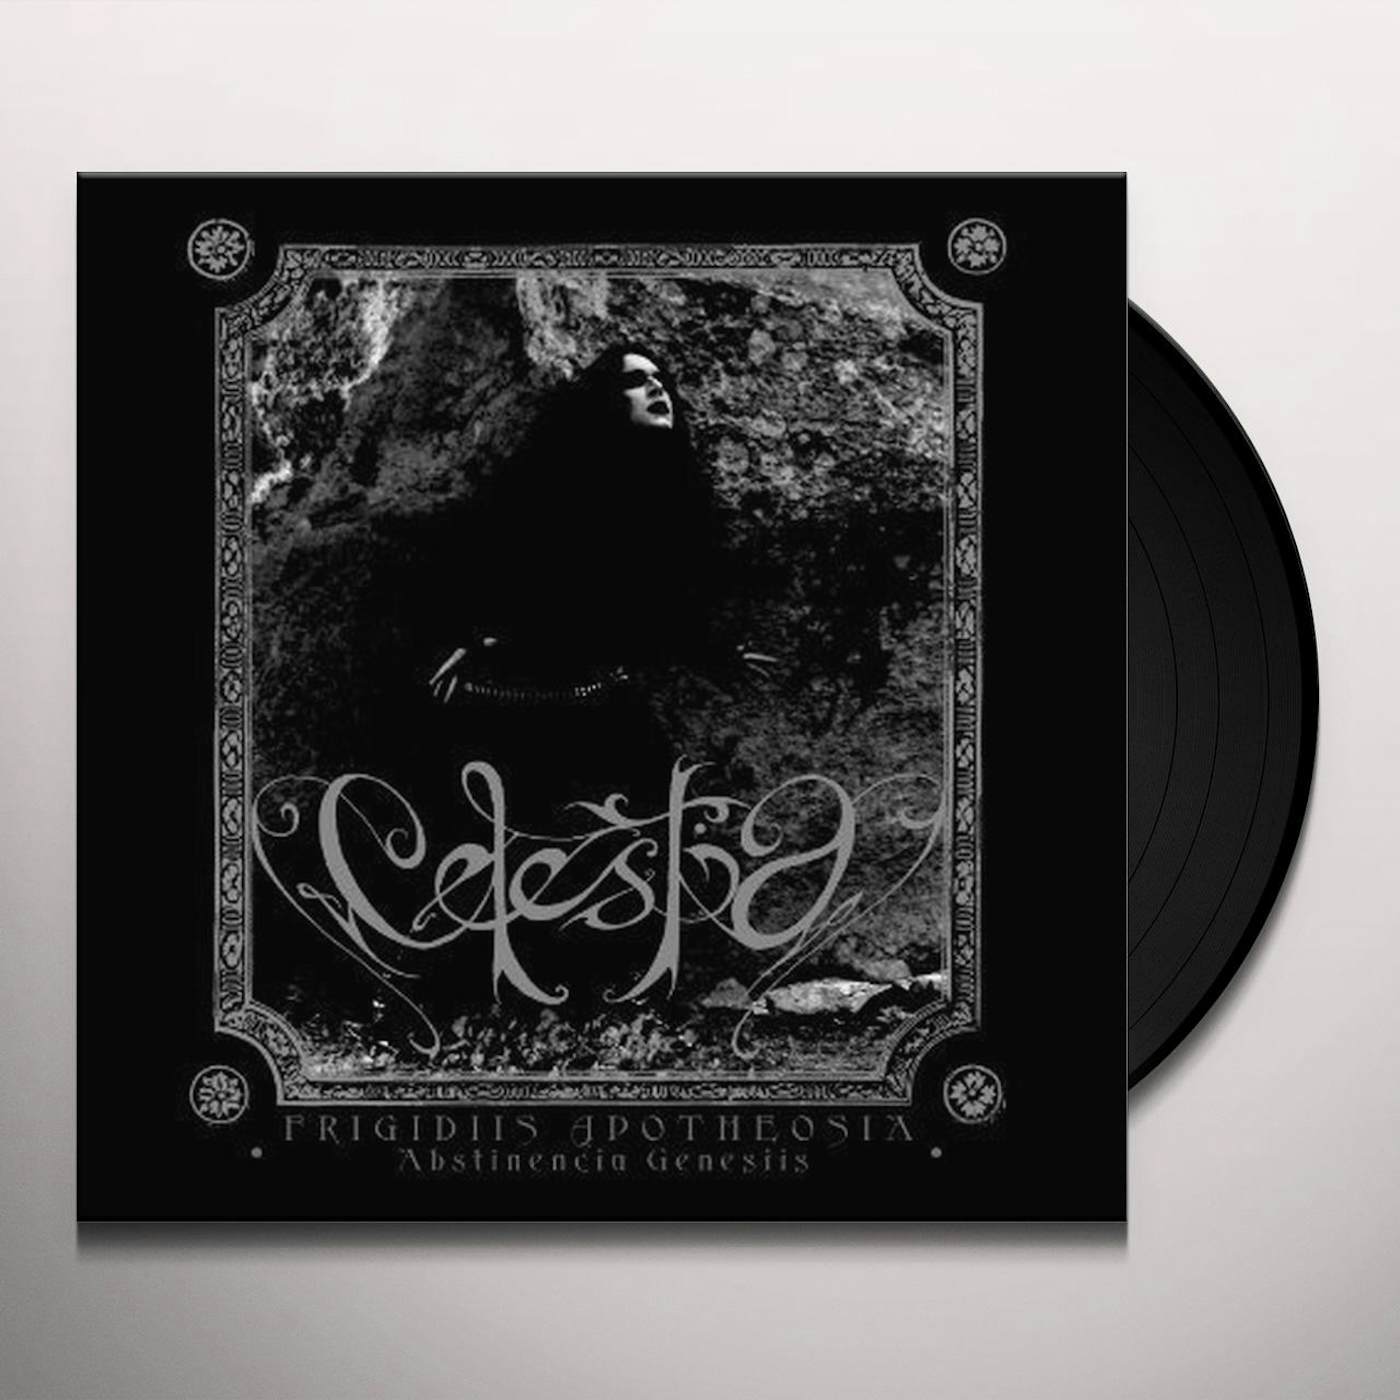 Celestia FRIGIDIIS APOTHEOSIA Vinyl Record - Holland Release